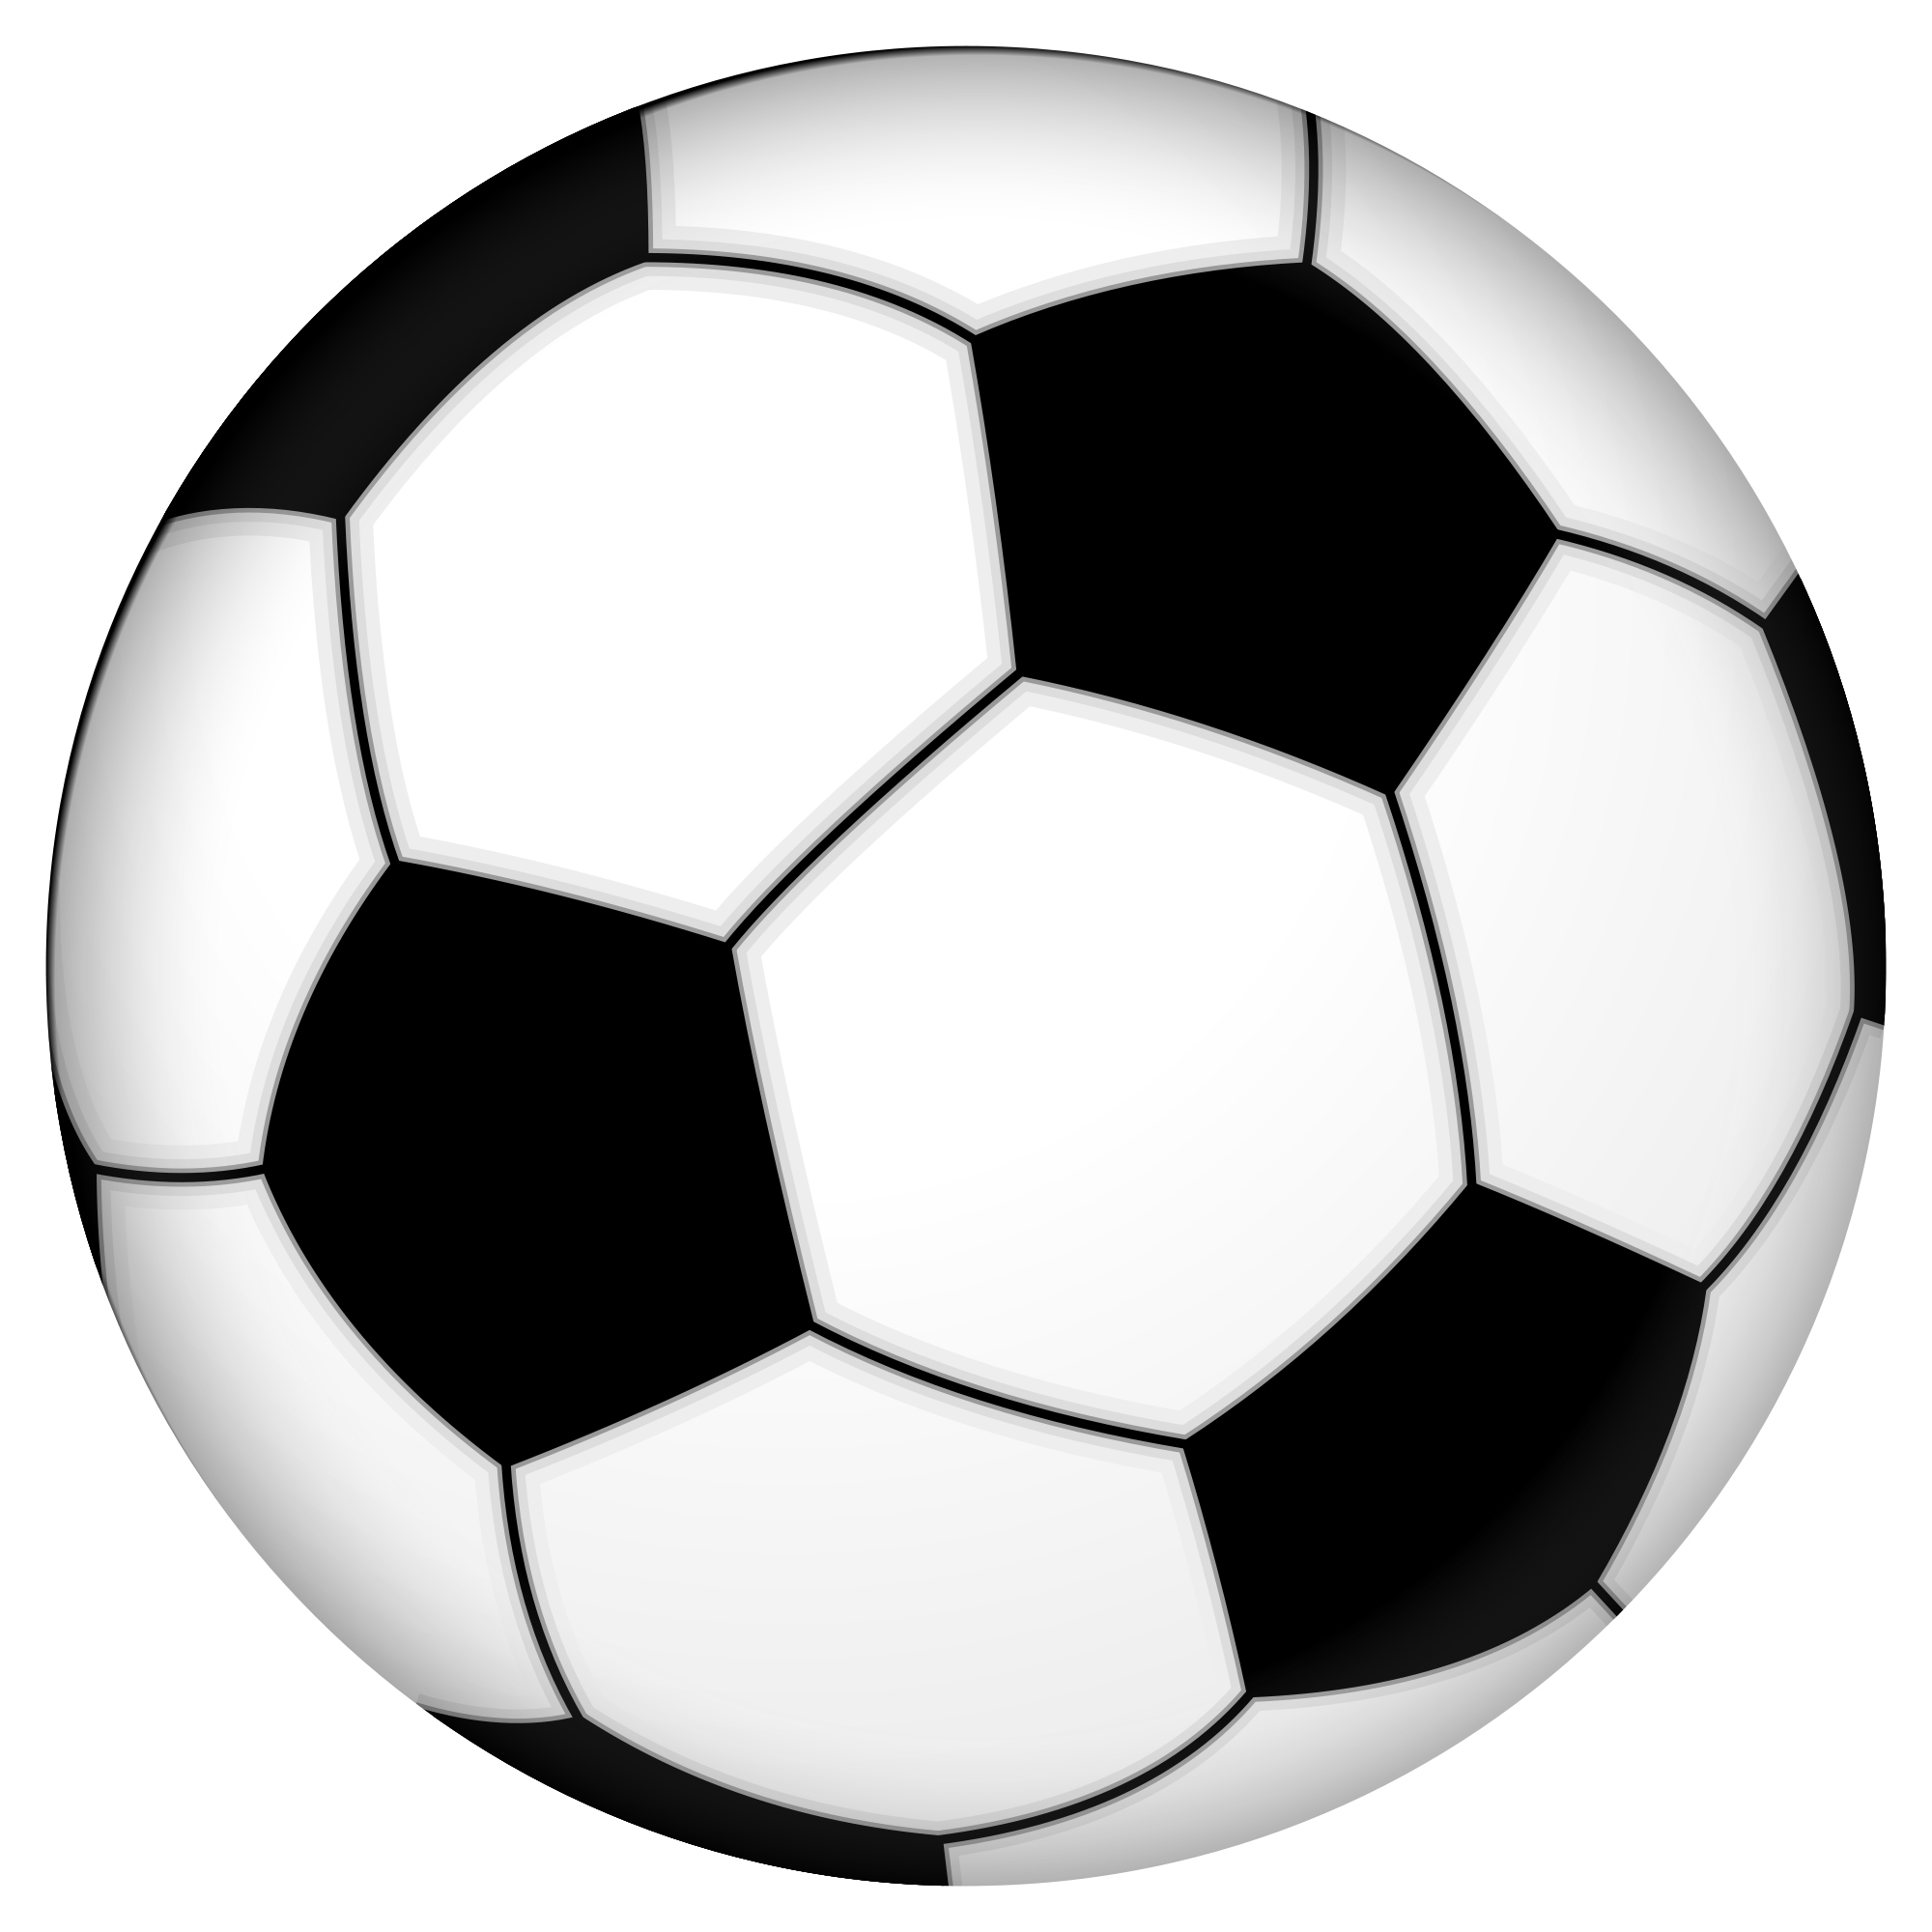 Soccer ball clipart background